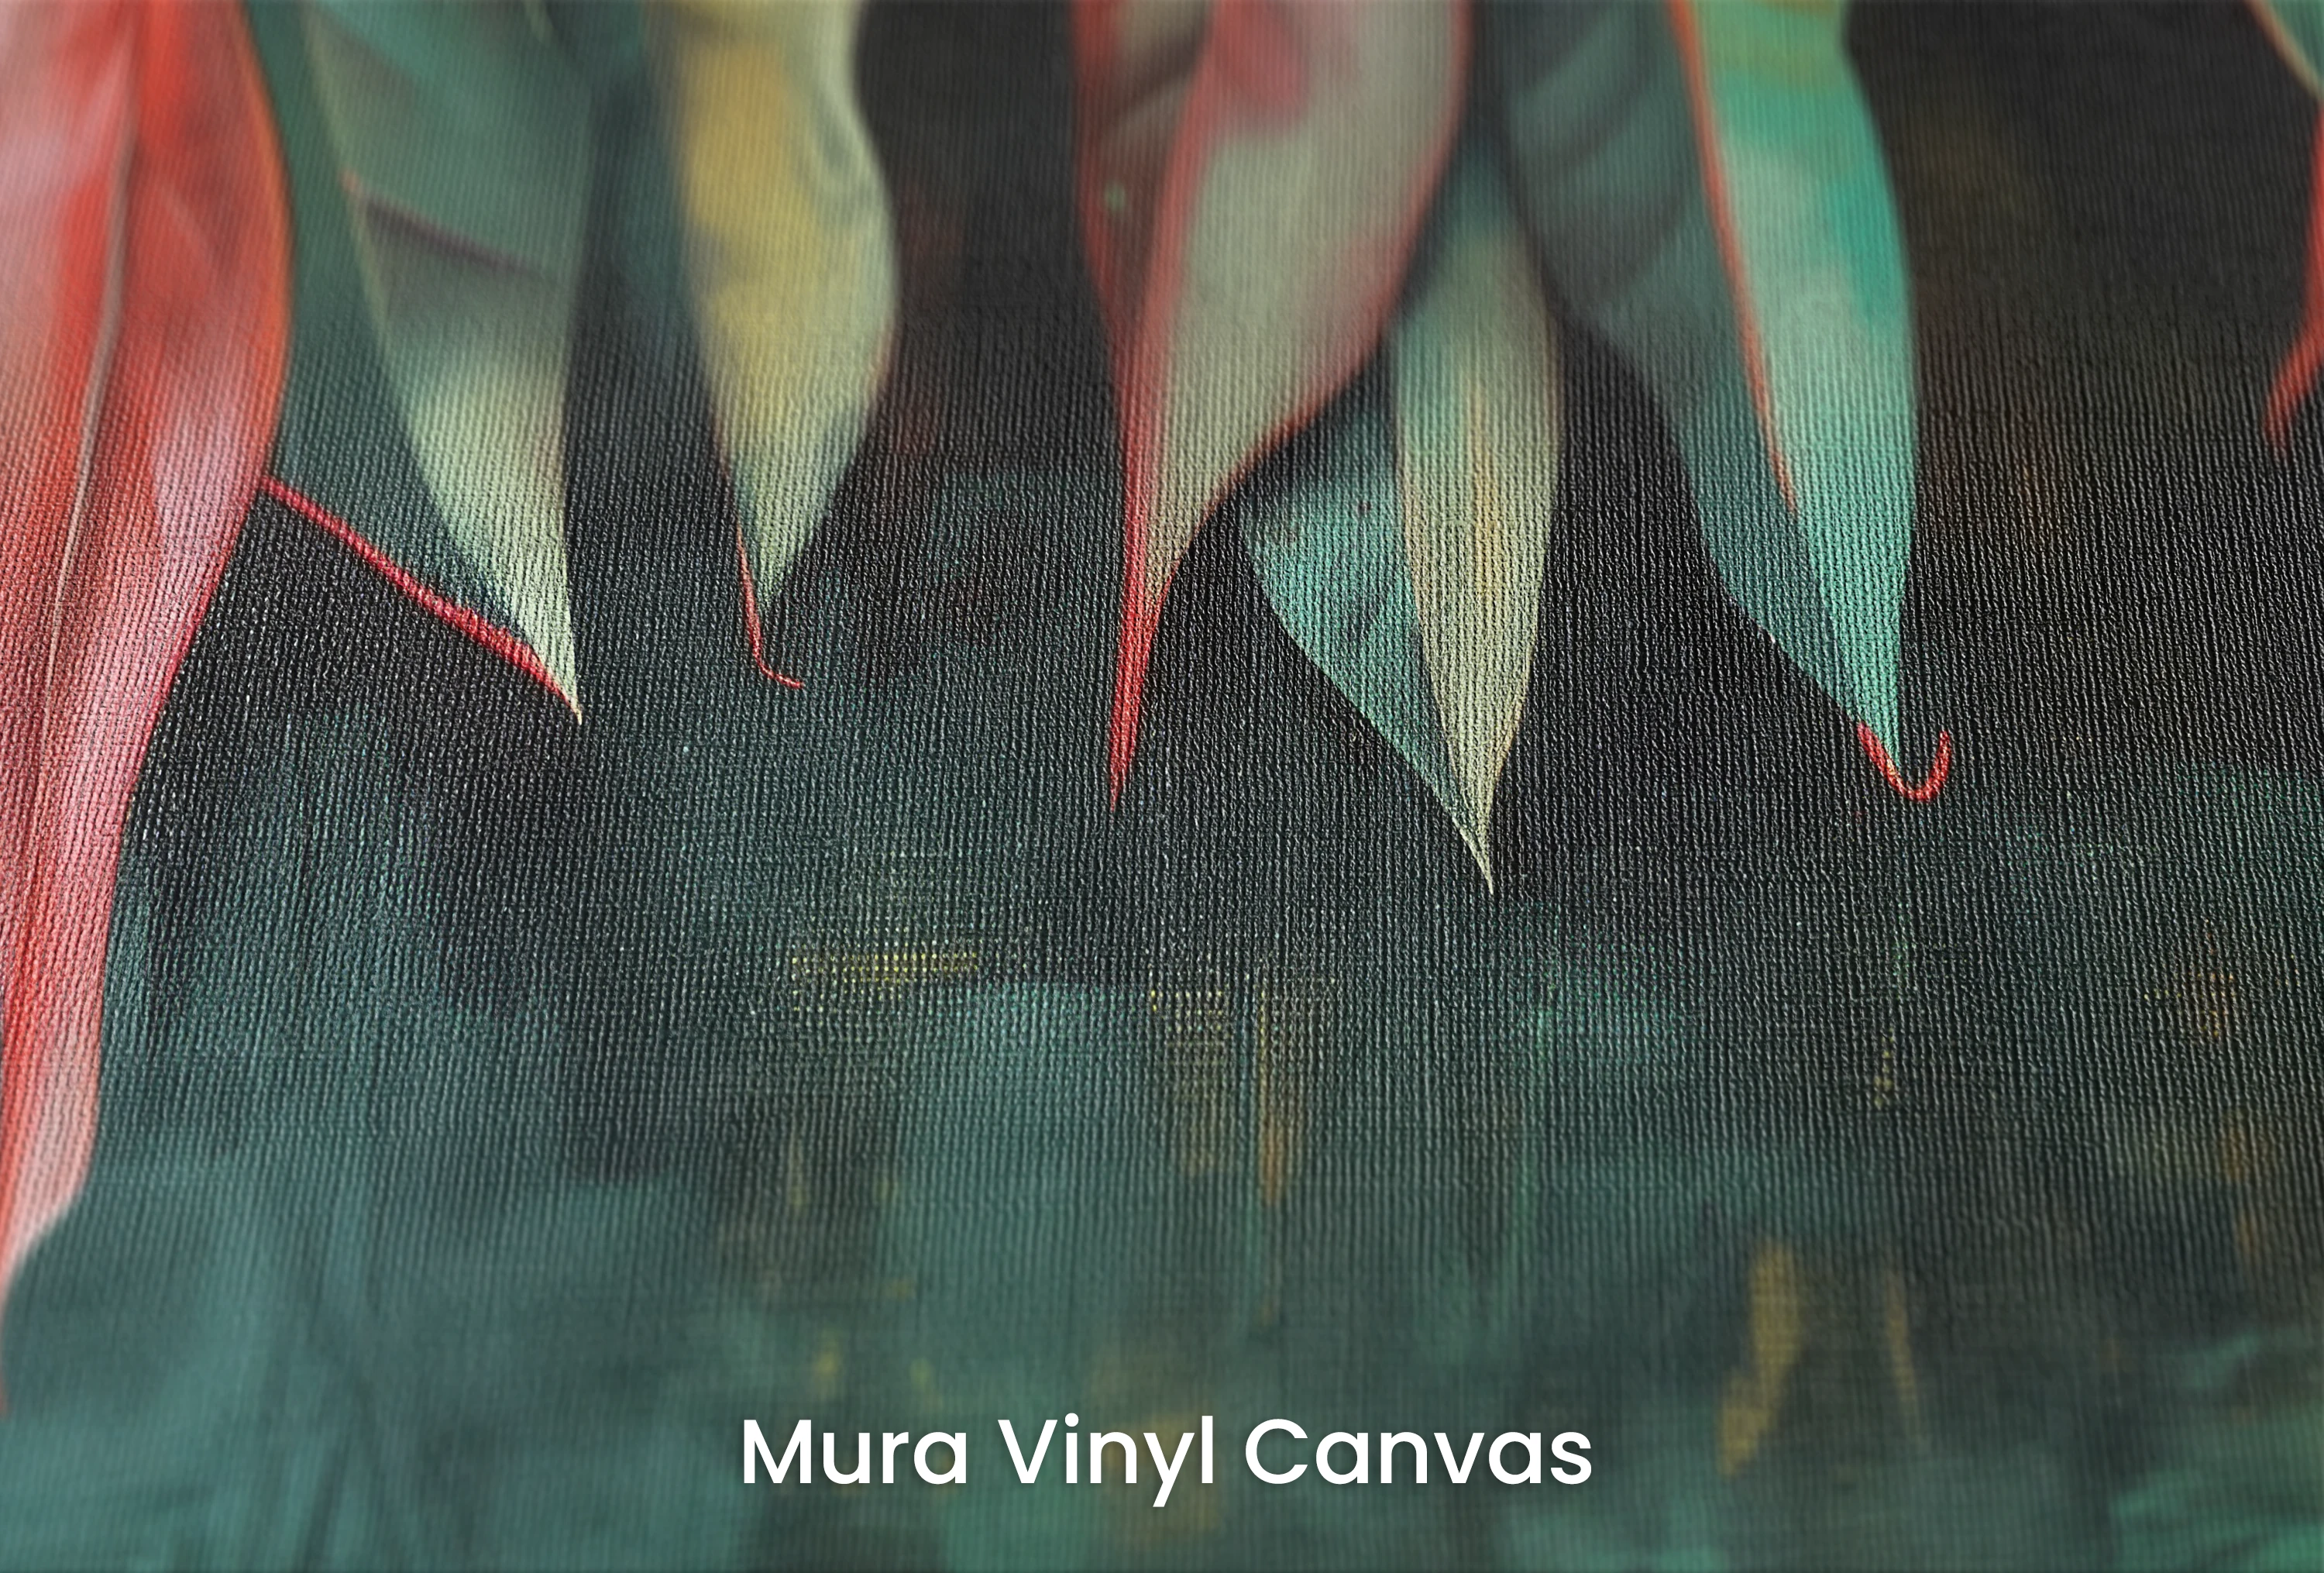 A photo wallpaper pattern printed on "Mura Vinyl Canvas"